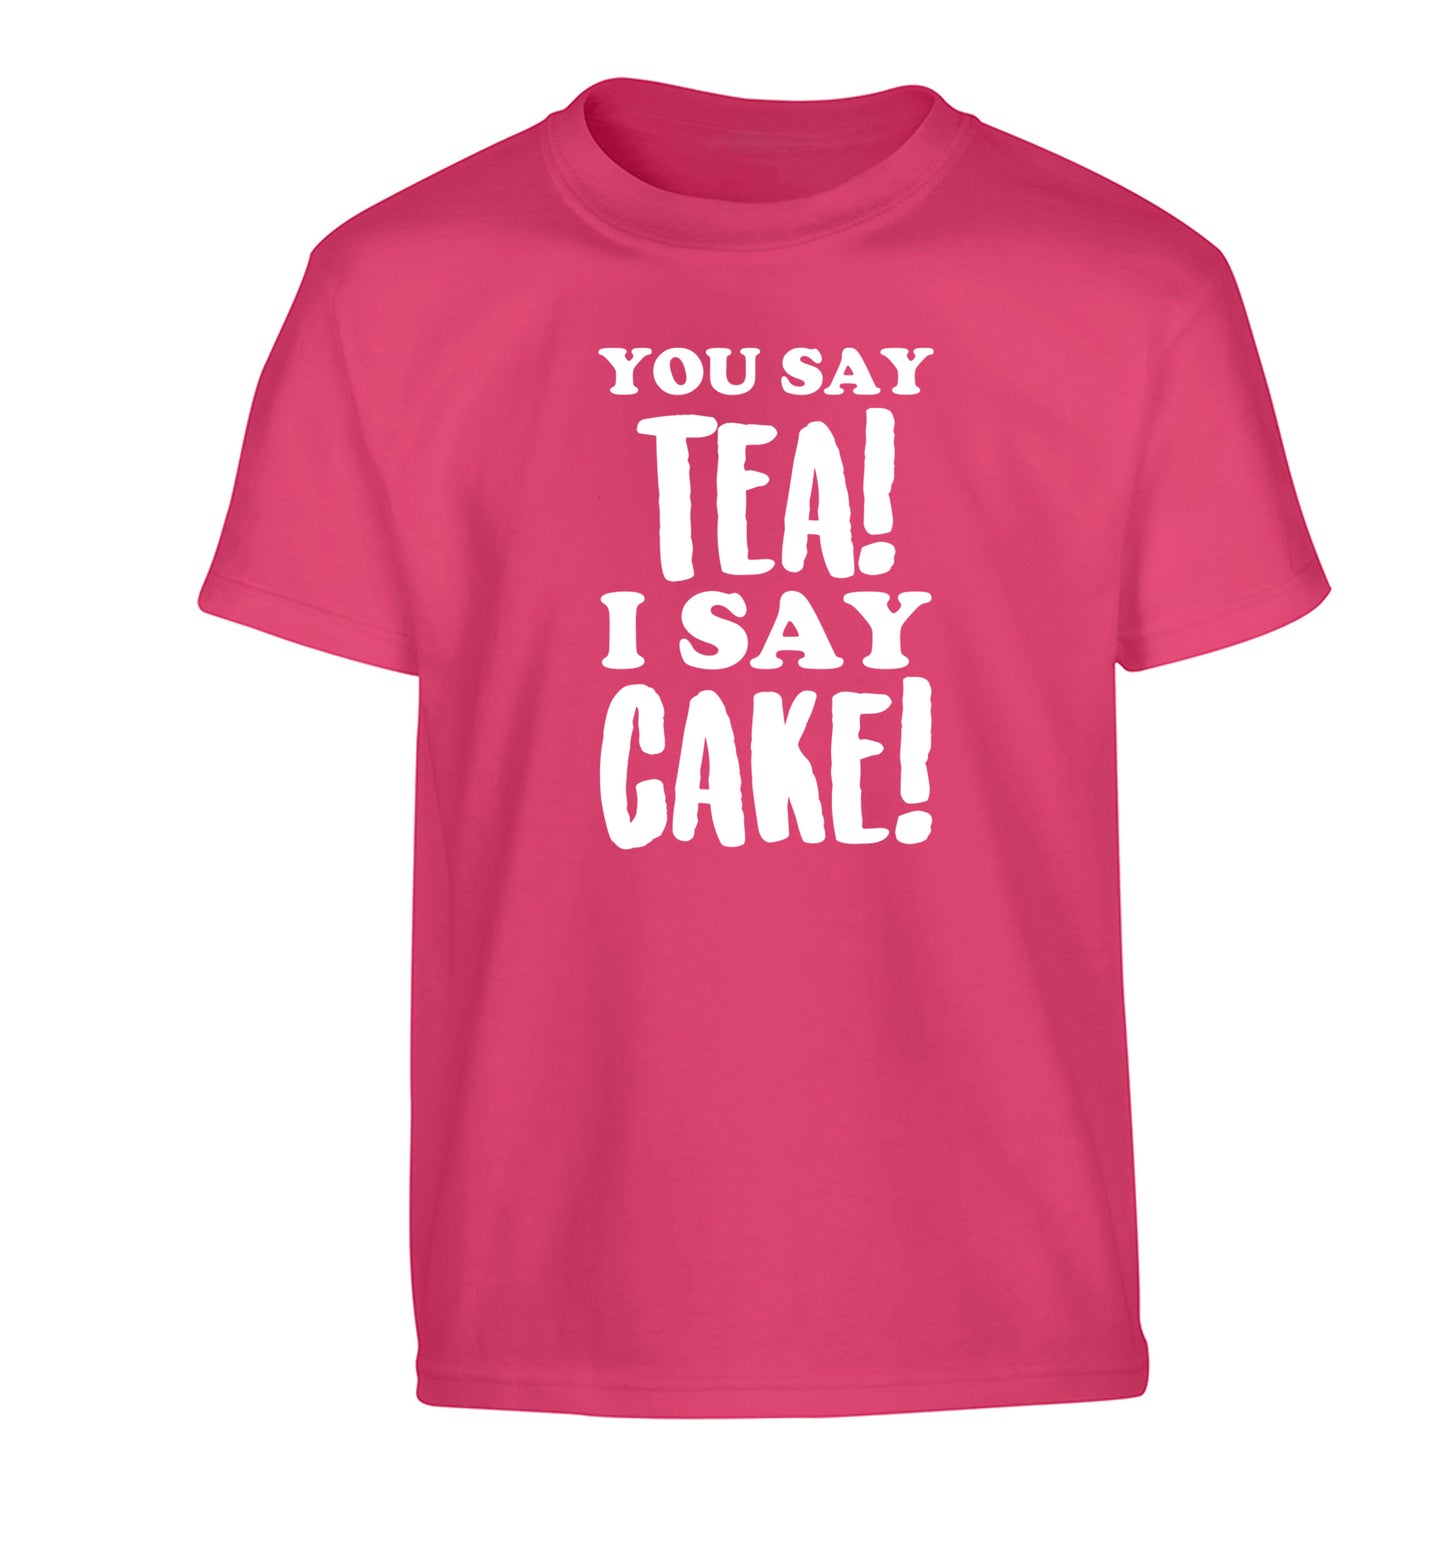 You say tea I say cake! Children's pink Tshirt 12-14 Years